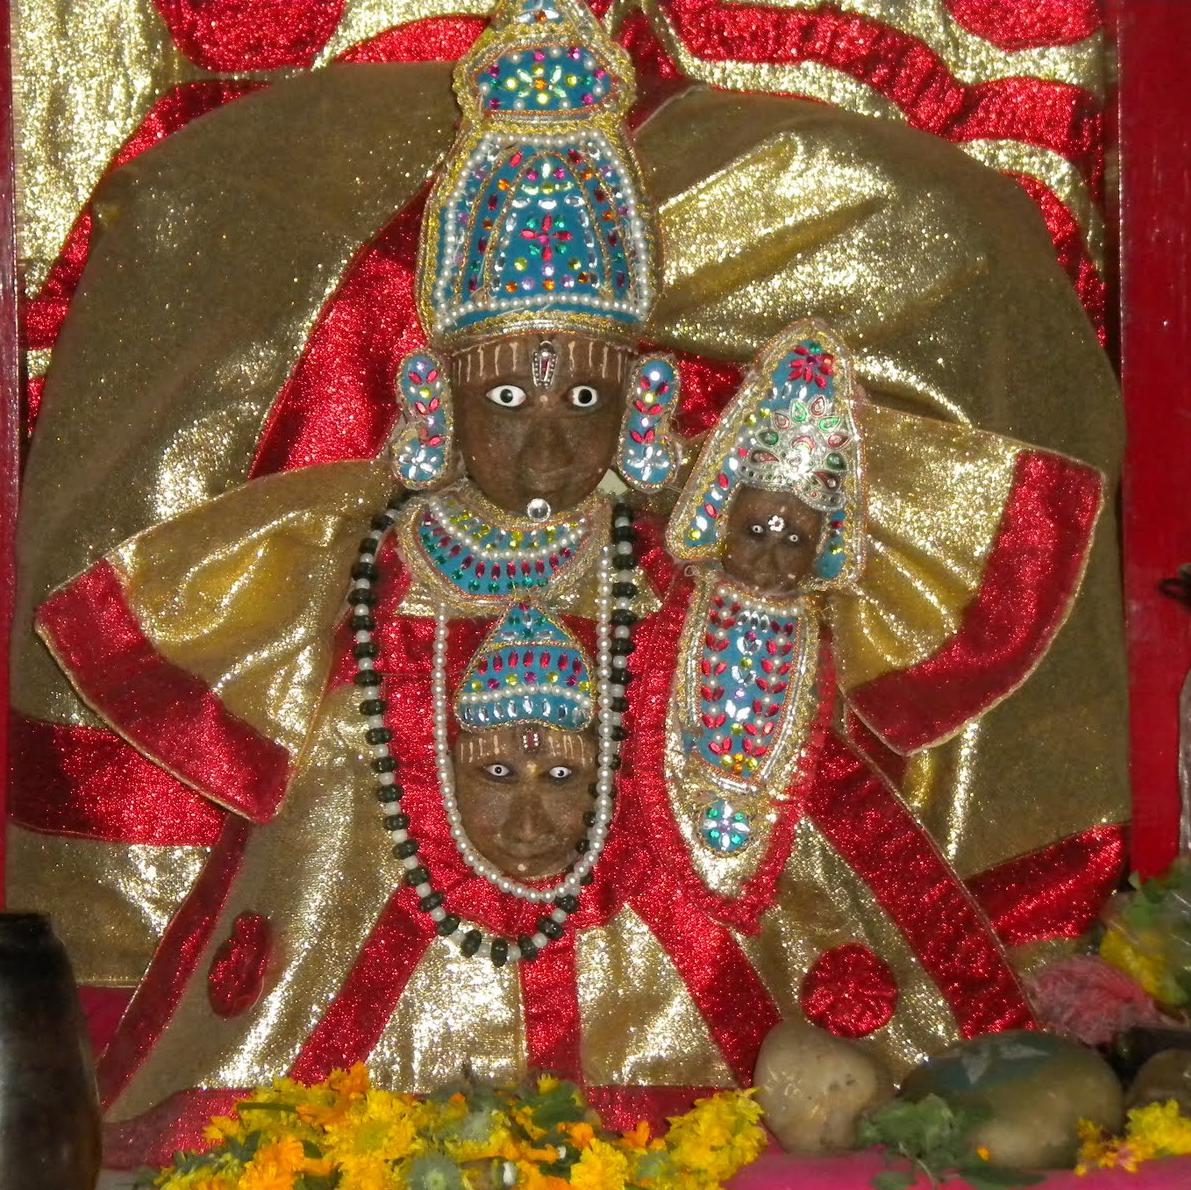 god lakshmi narayanan